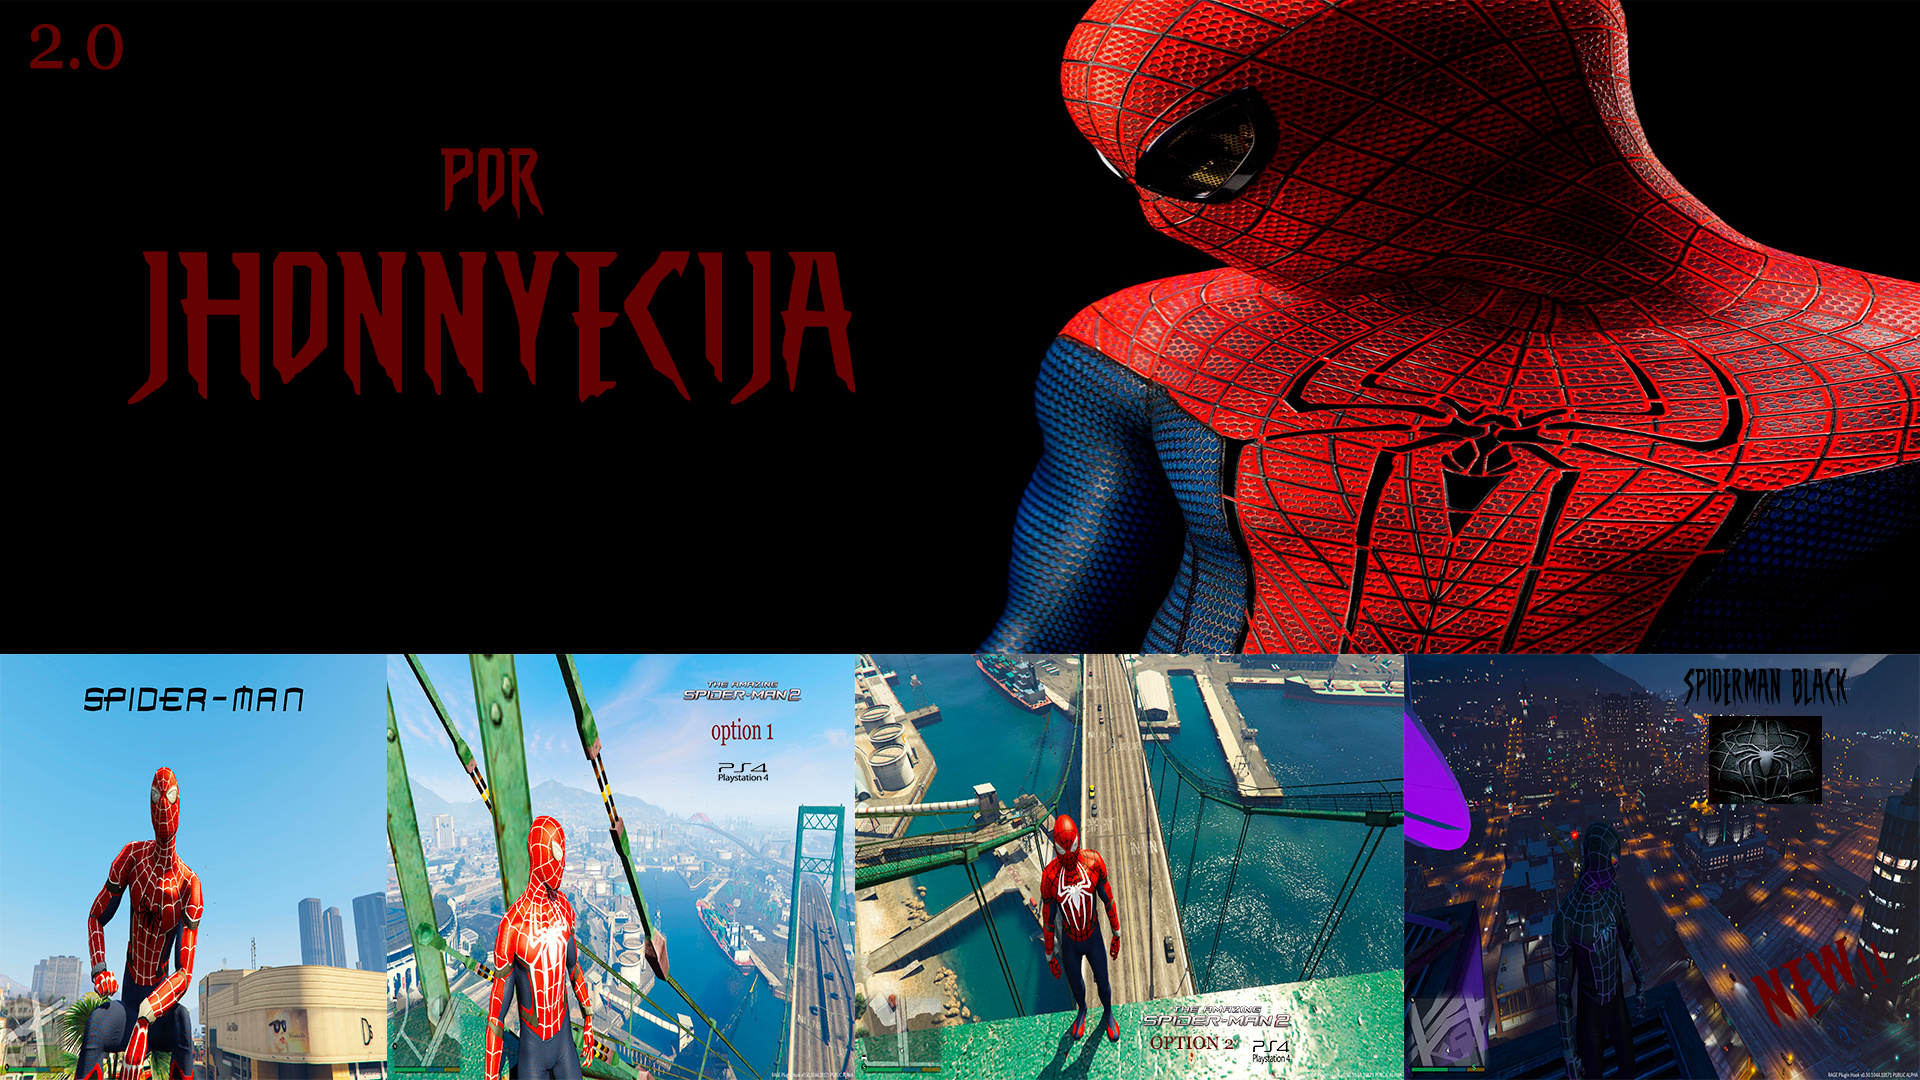 Spiderman, Spiderman PS4 and Spiderman Black 